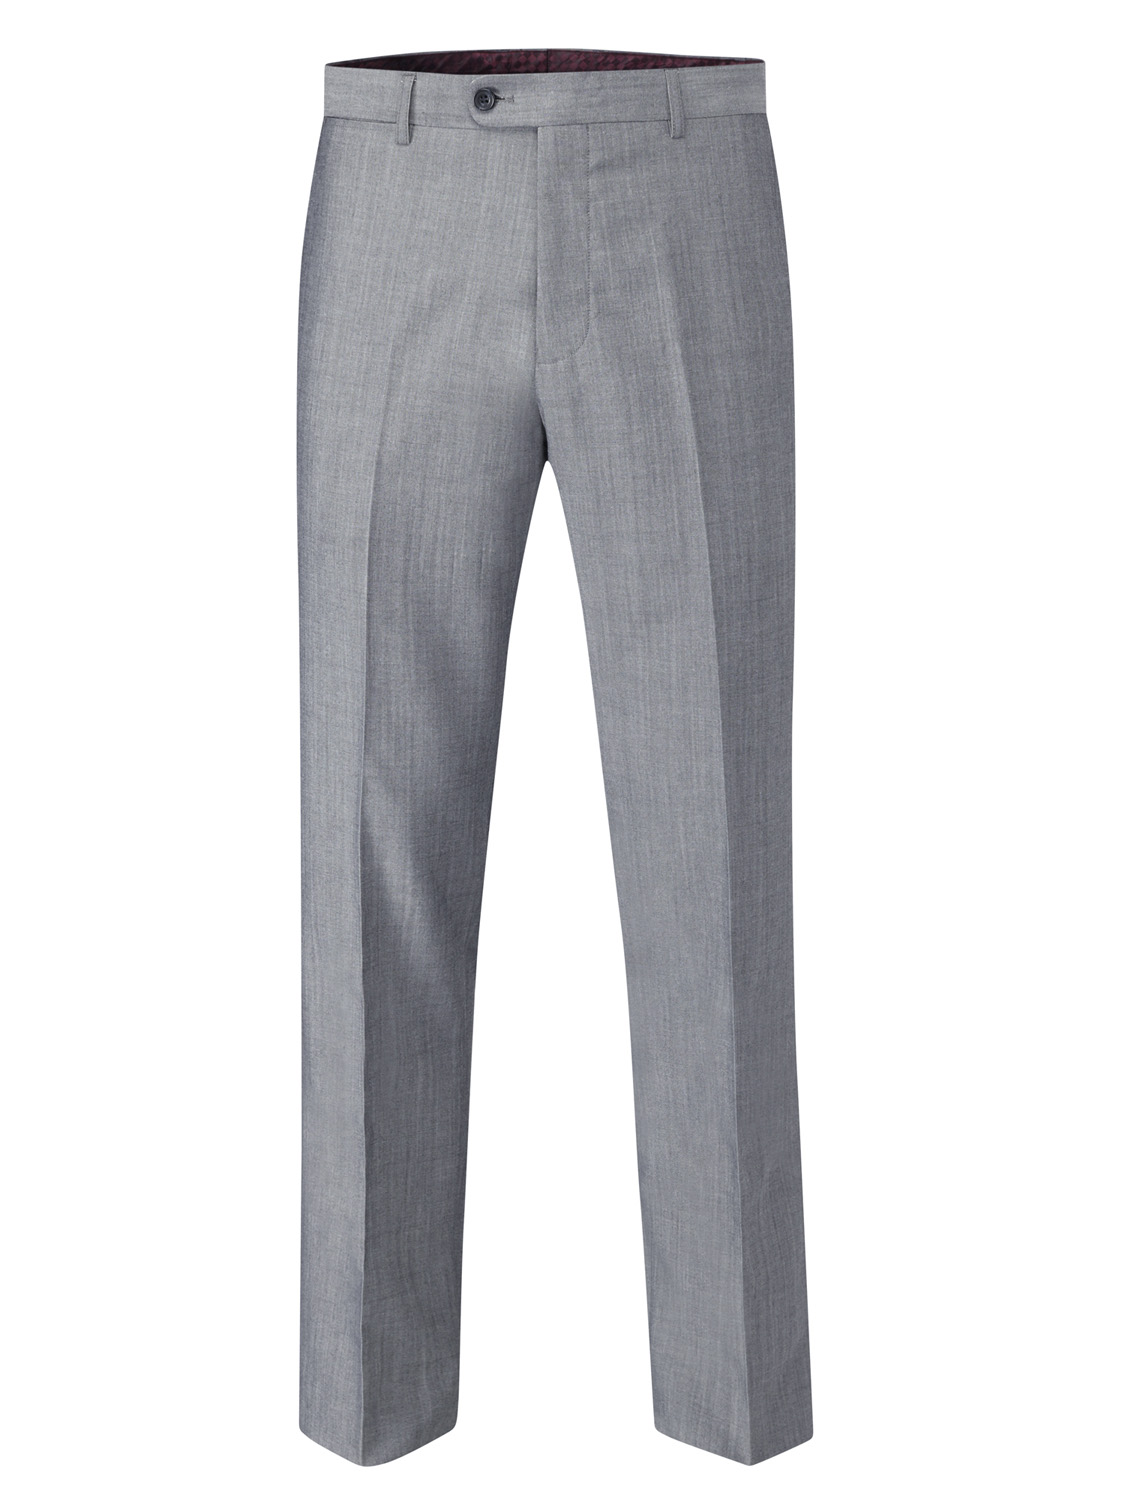 Egan Light Grey 3 Piece Suit - Tom Murphy's Formal and Menswear